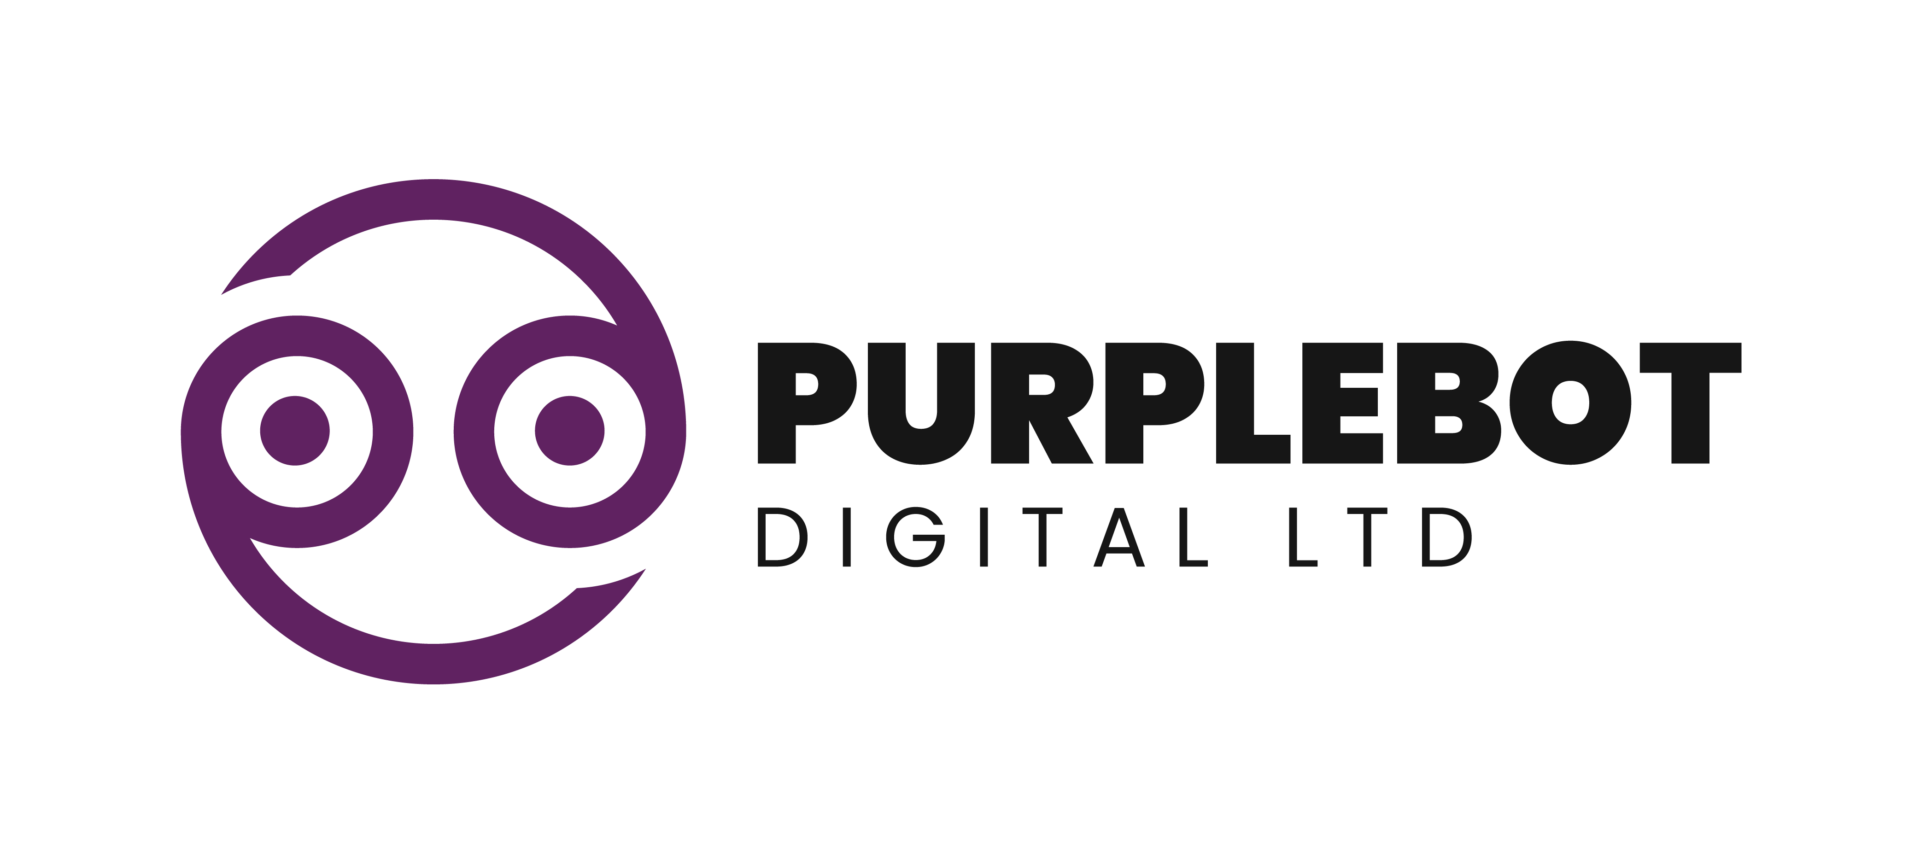 Purplebot Digital